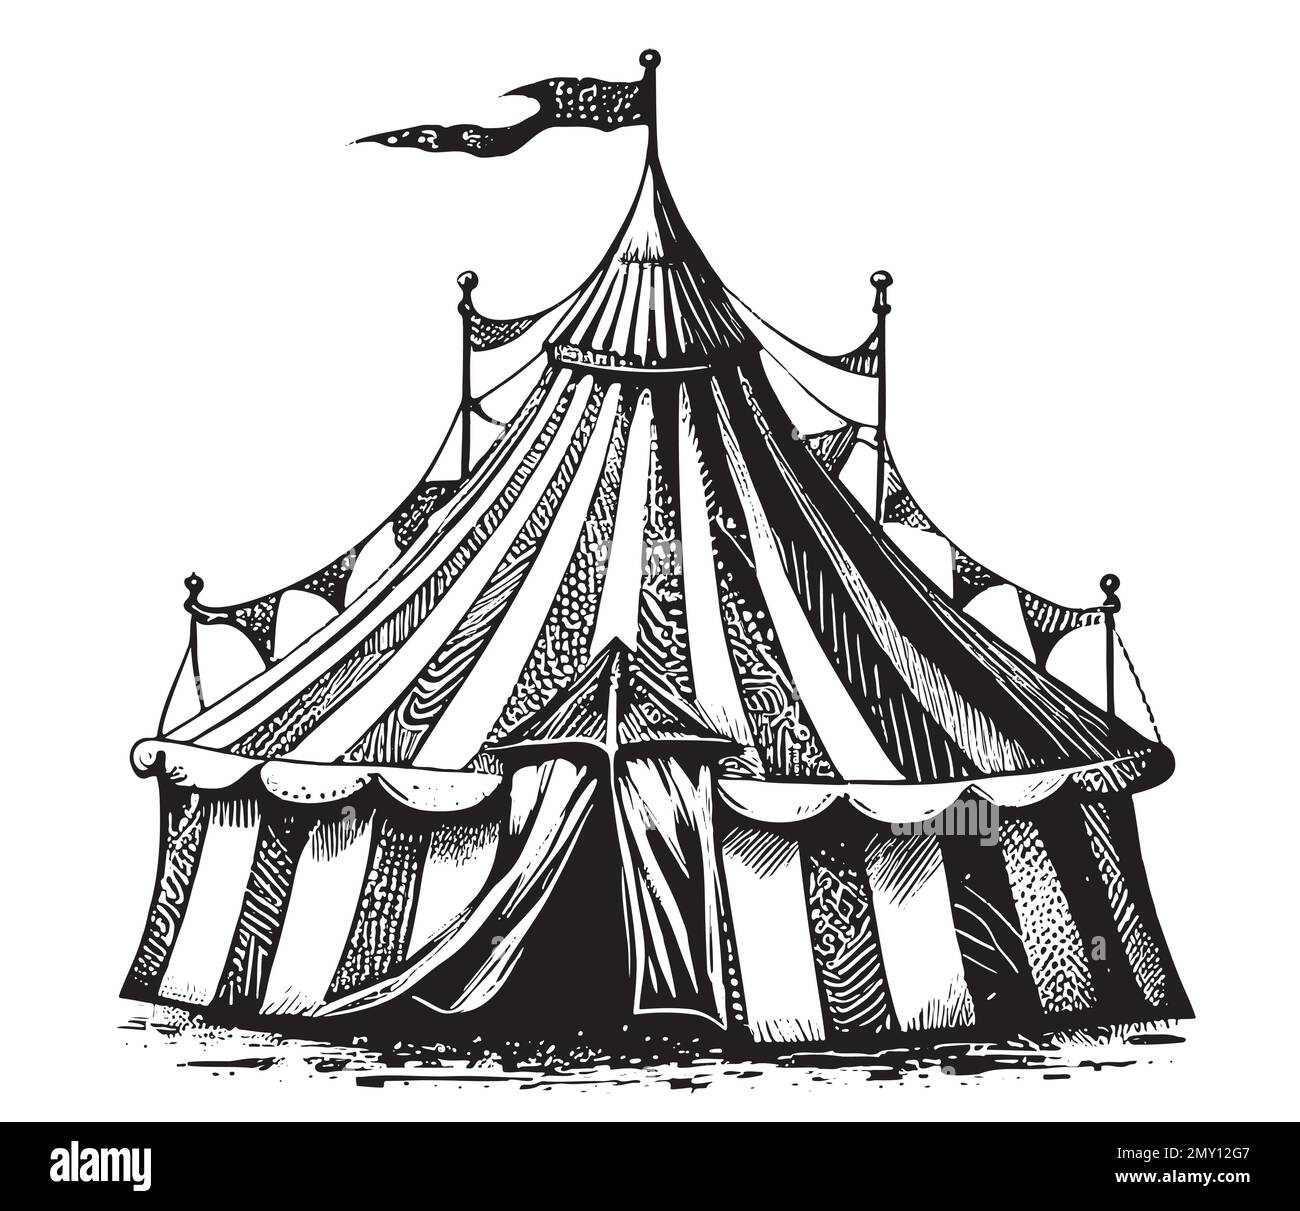 Circus Tent Hand Drawn Sketch Vector Illustration Stock Vector Image Art Alamy